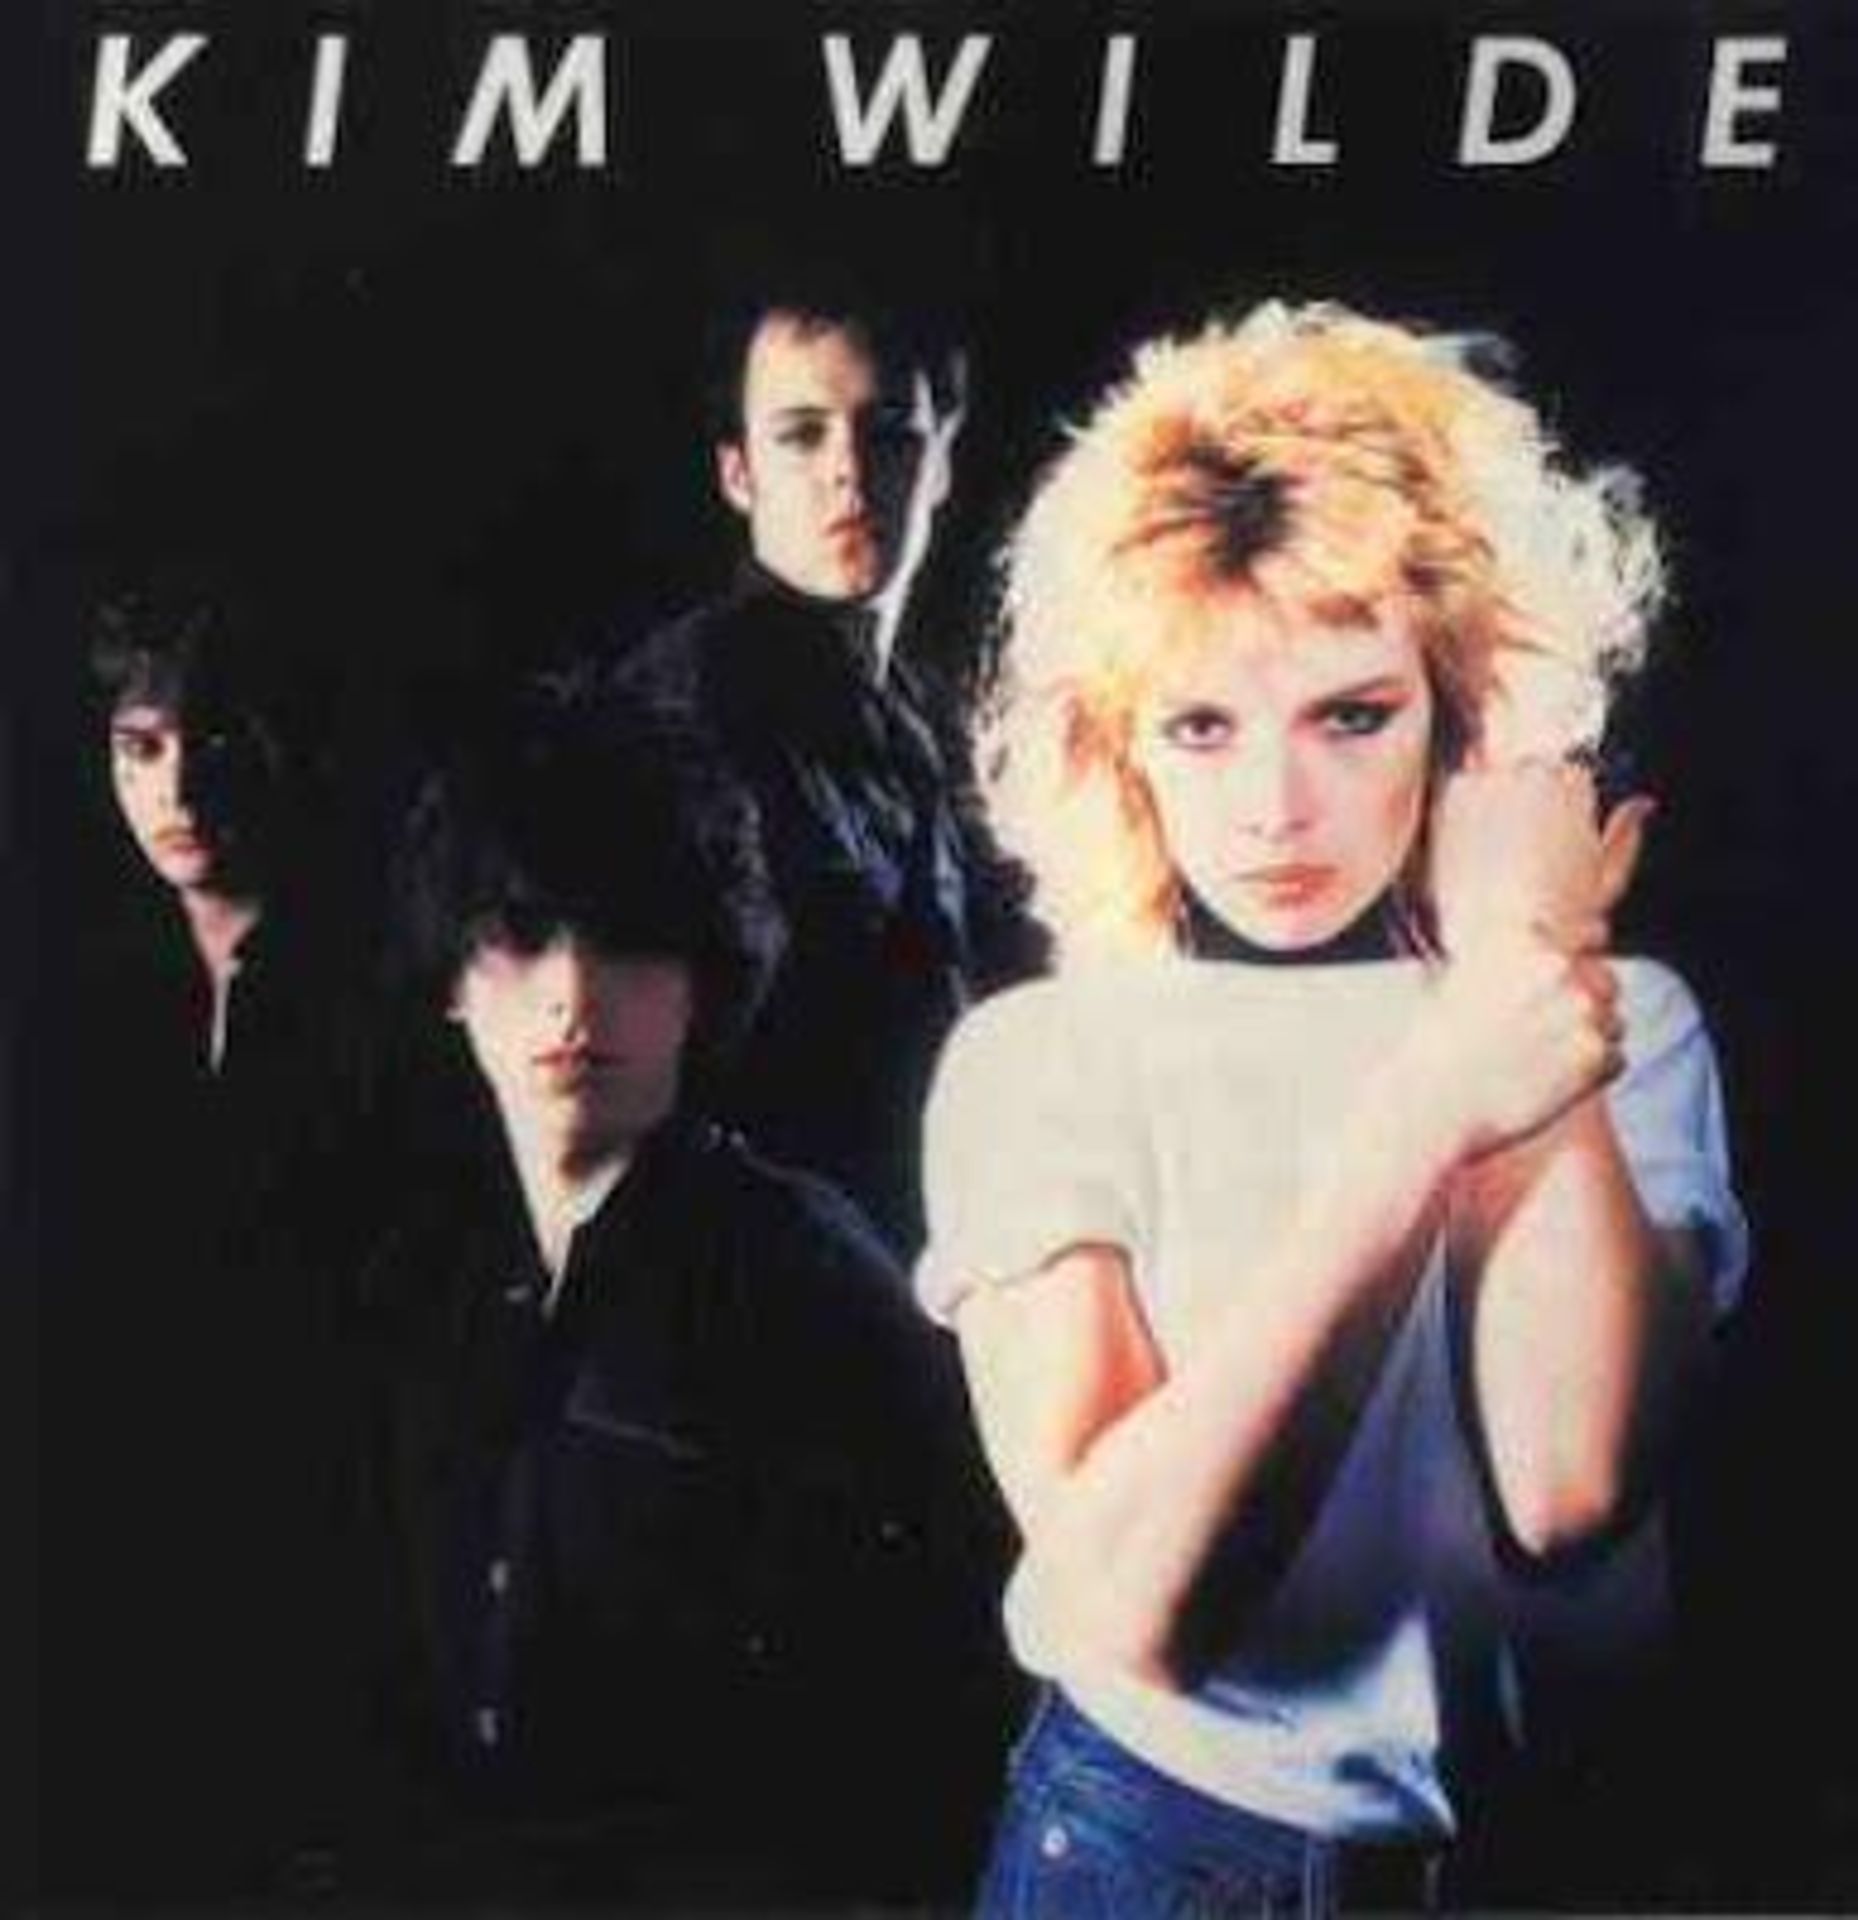 1000 X Kim Wilde CD's – Gwp newspaper inserts – NO VATUK Delivery £40